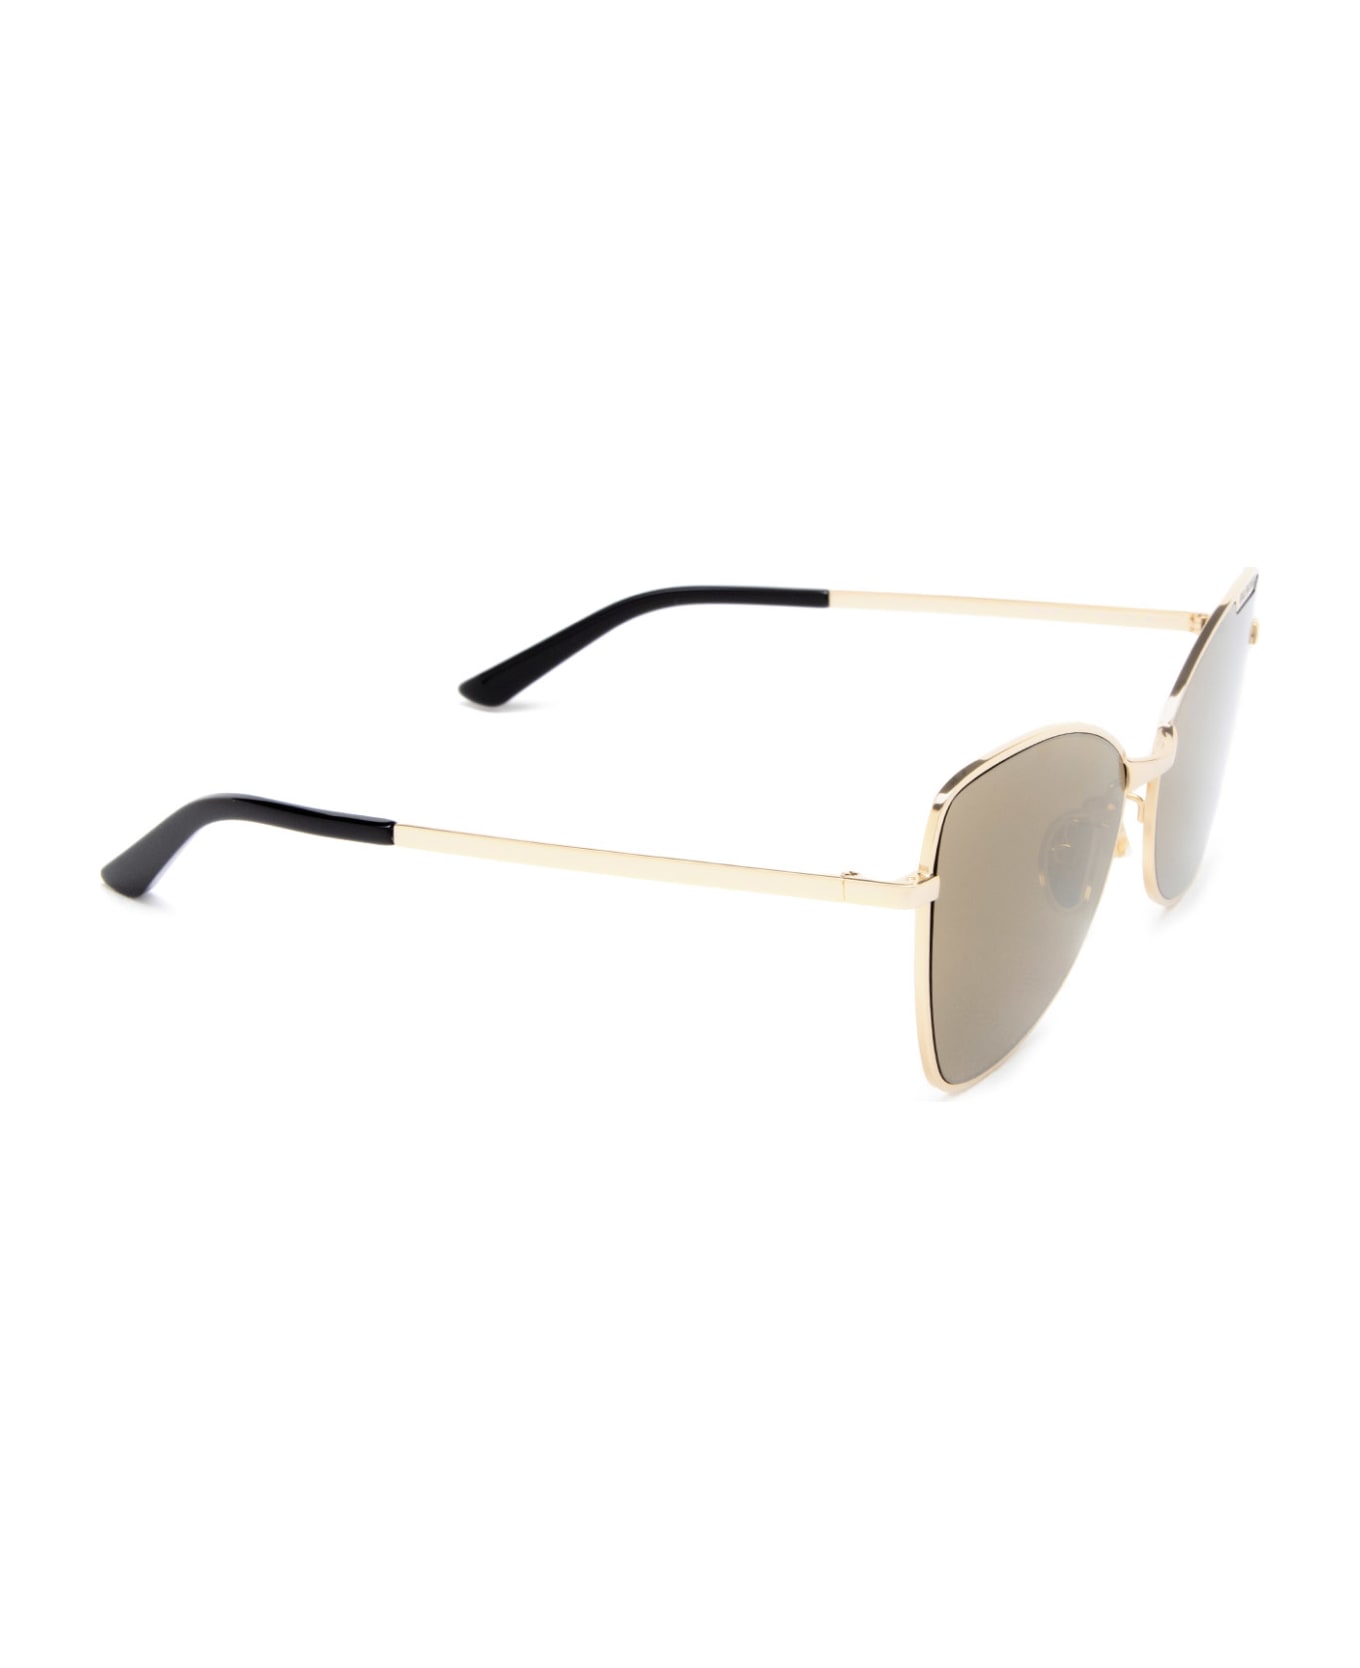 Balenciaga Eyewear Butterfly Frame Sunglasses - Gold